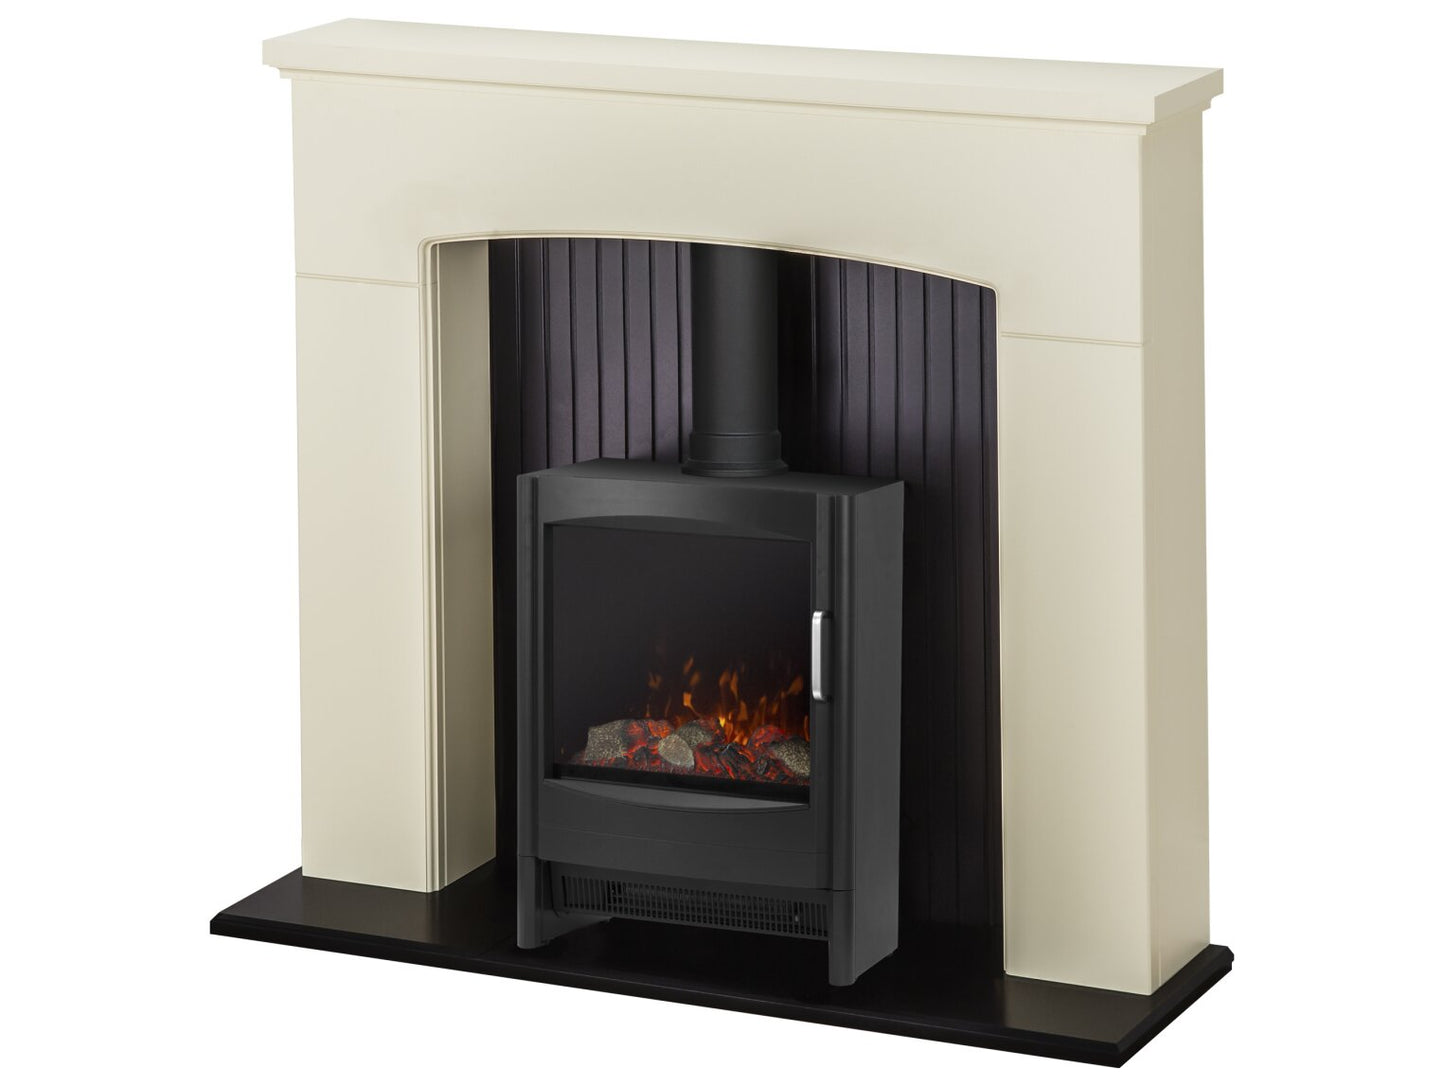 Adam Derwent Stove Fireplace in Cream with Keston Electric Stove 48 Inch 23514 Black